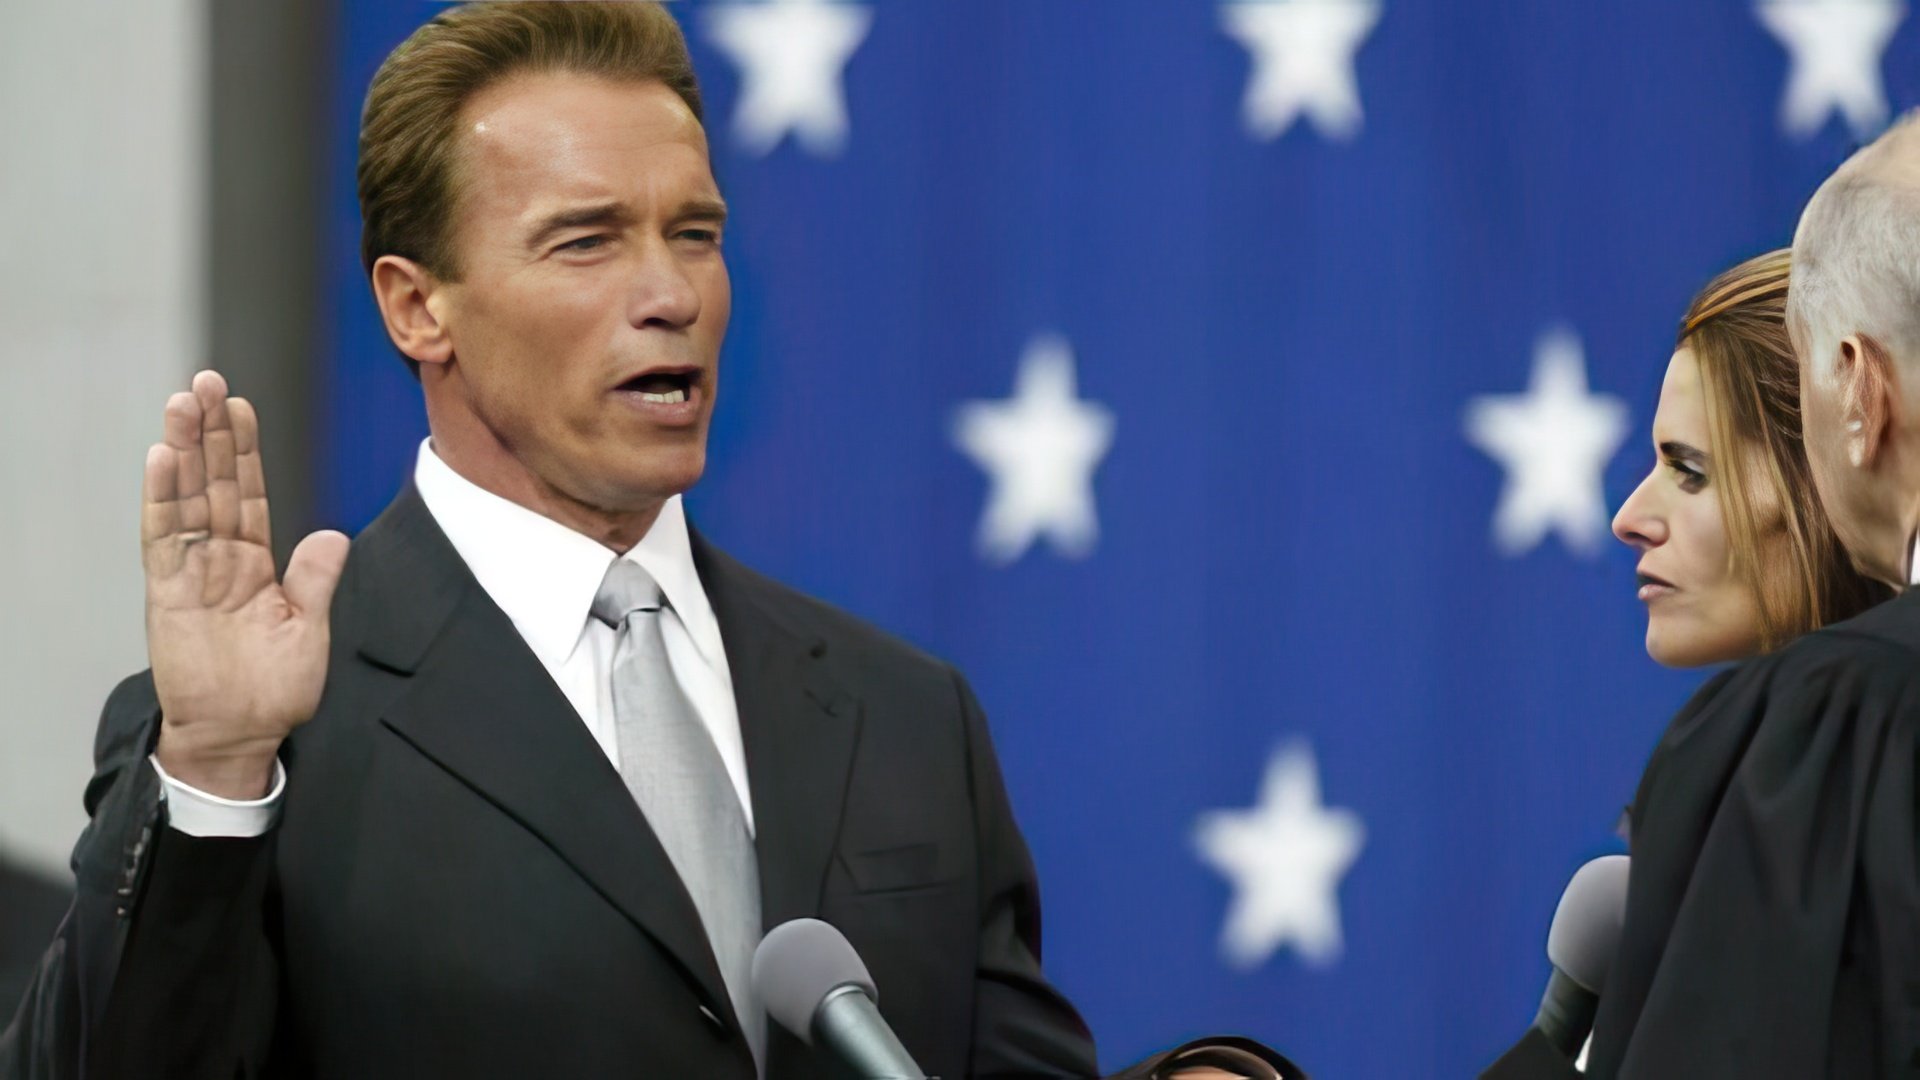 Schwarzenegger is sworn in as the new Governor of California